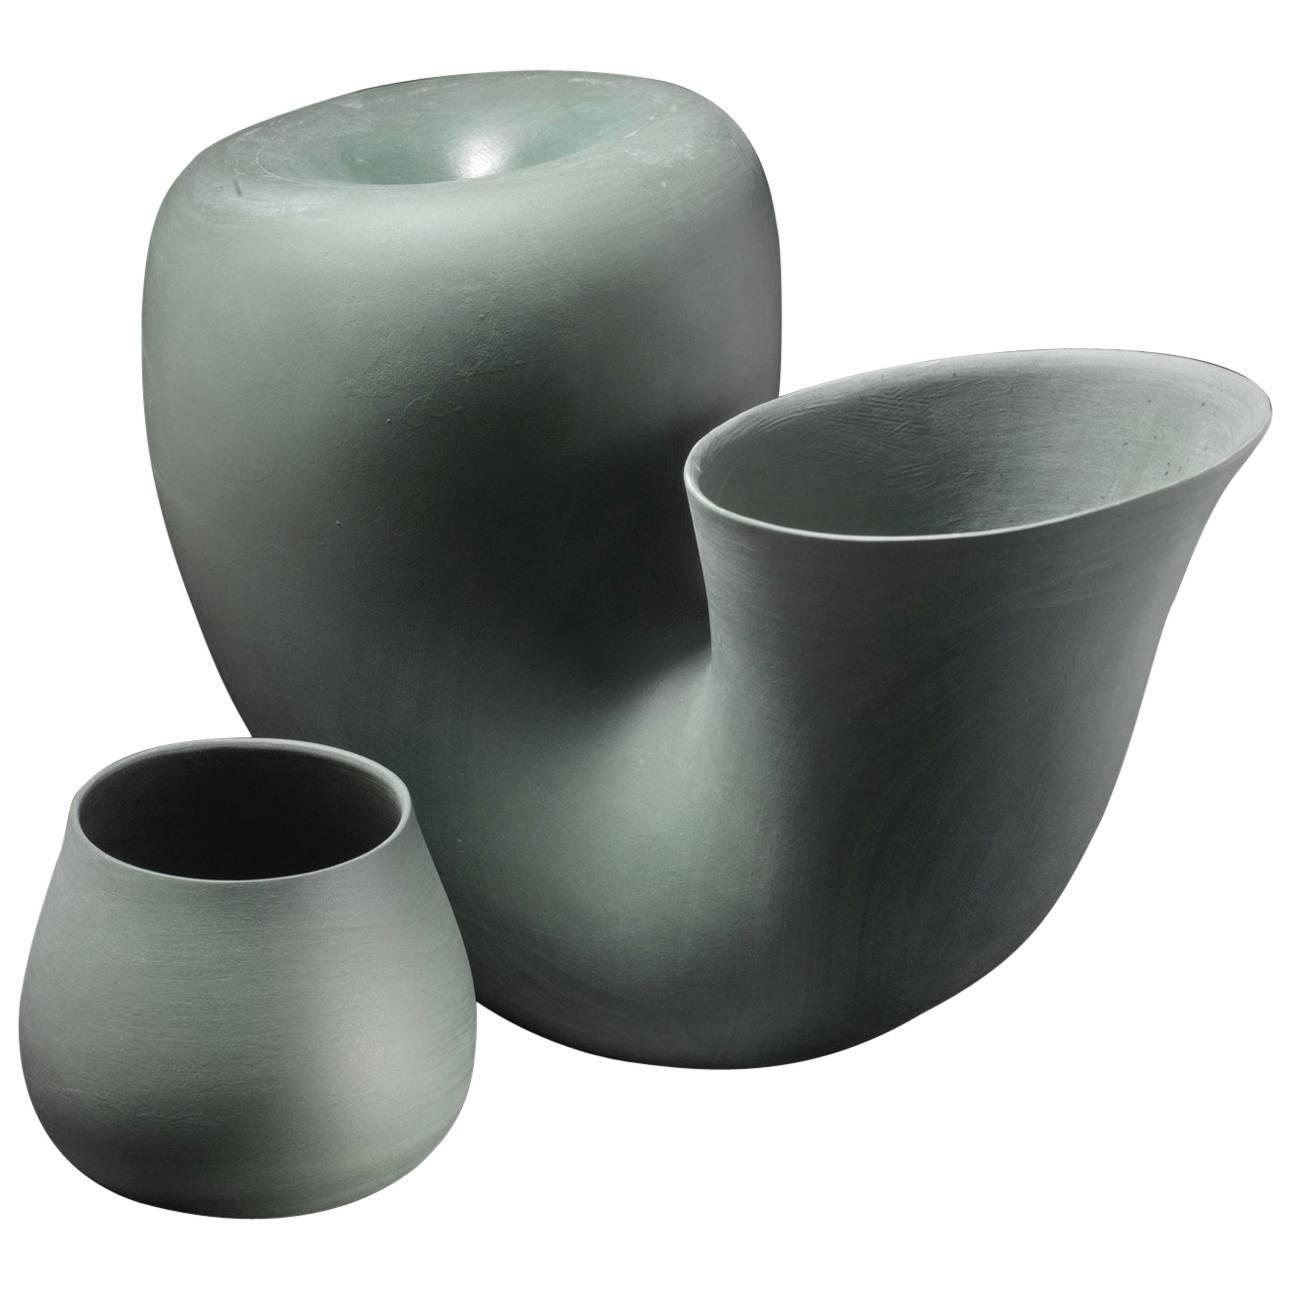 Particles Gallery Collection: Jug + Cup by Aldo Bakker ‘Porcelain Carafe’